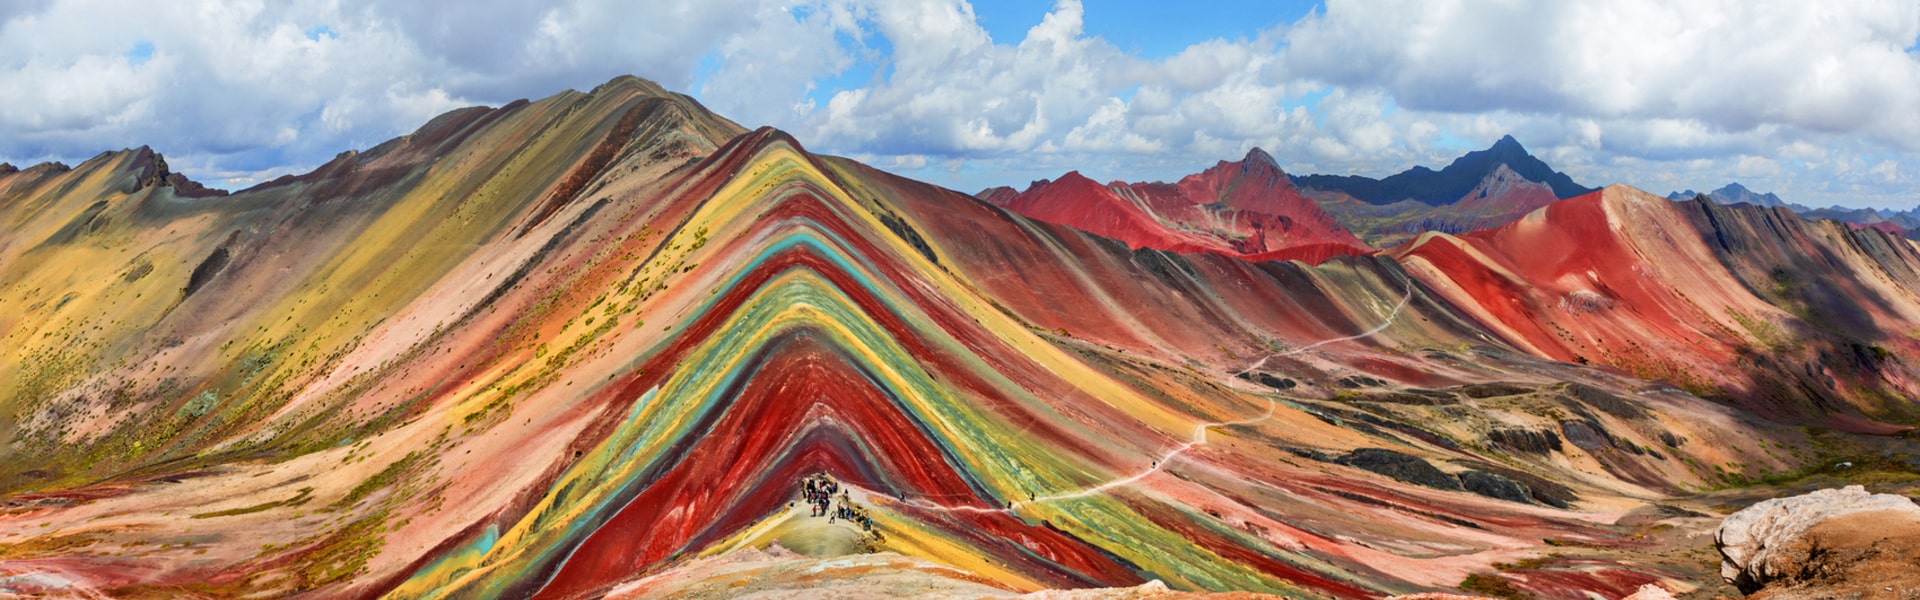 Rainbow Mountain - Famous Landmarks of Peru